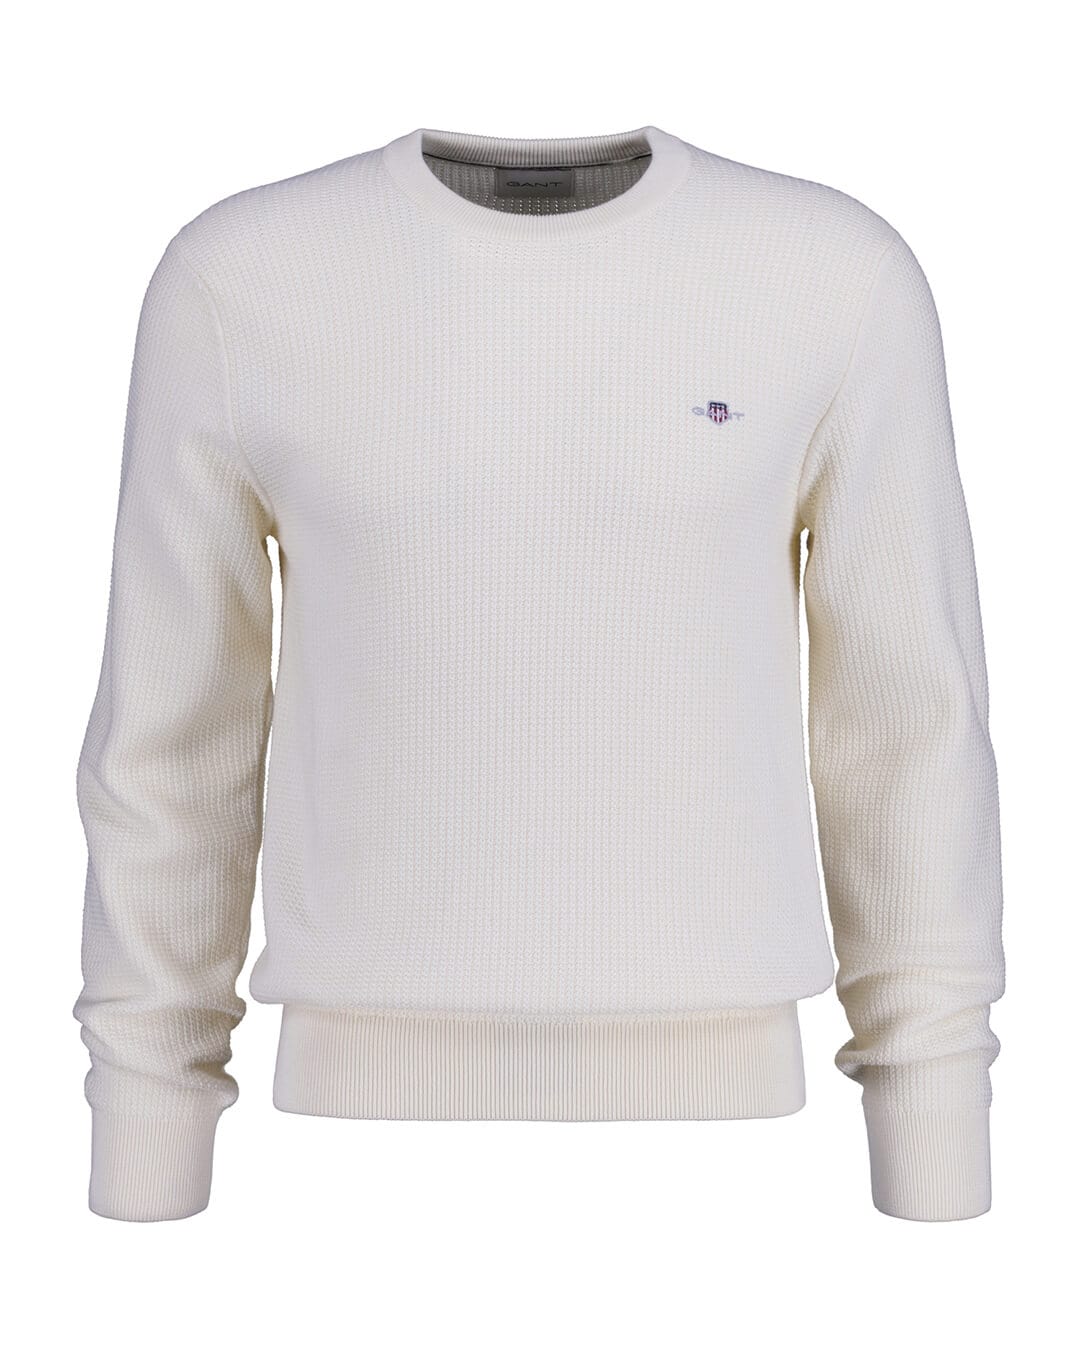 Gant Jumpers Gant Cream Micro Cotton Textured Crew Neck Sweater